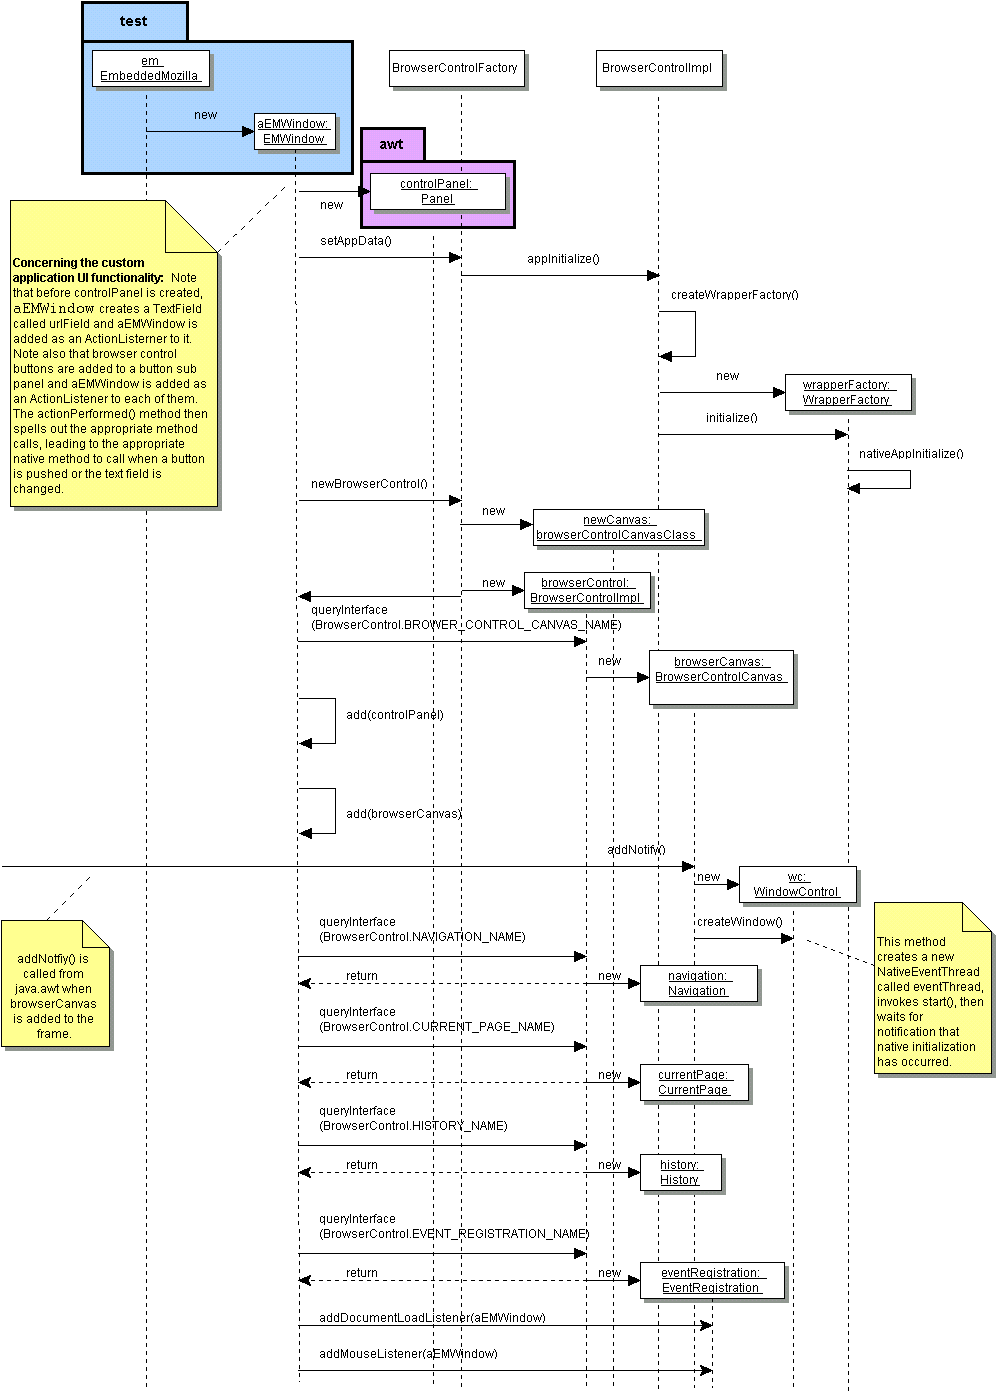 Sequence Diagram and Description